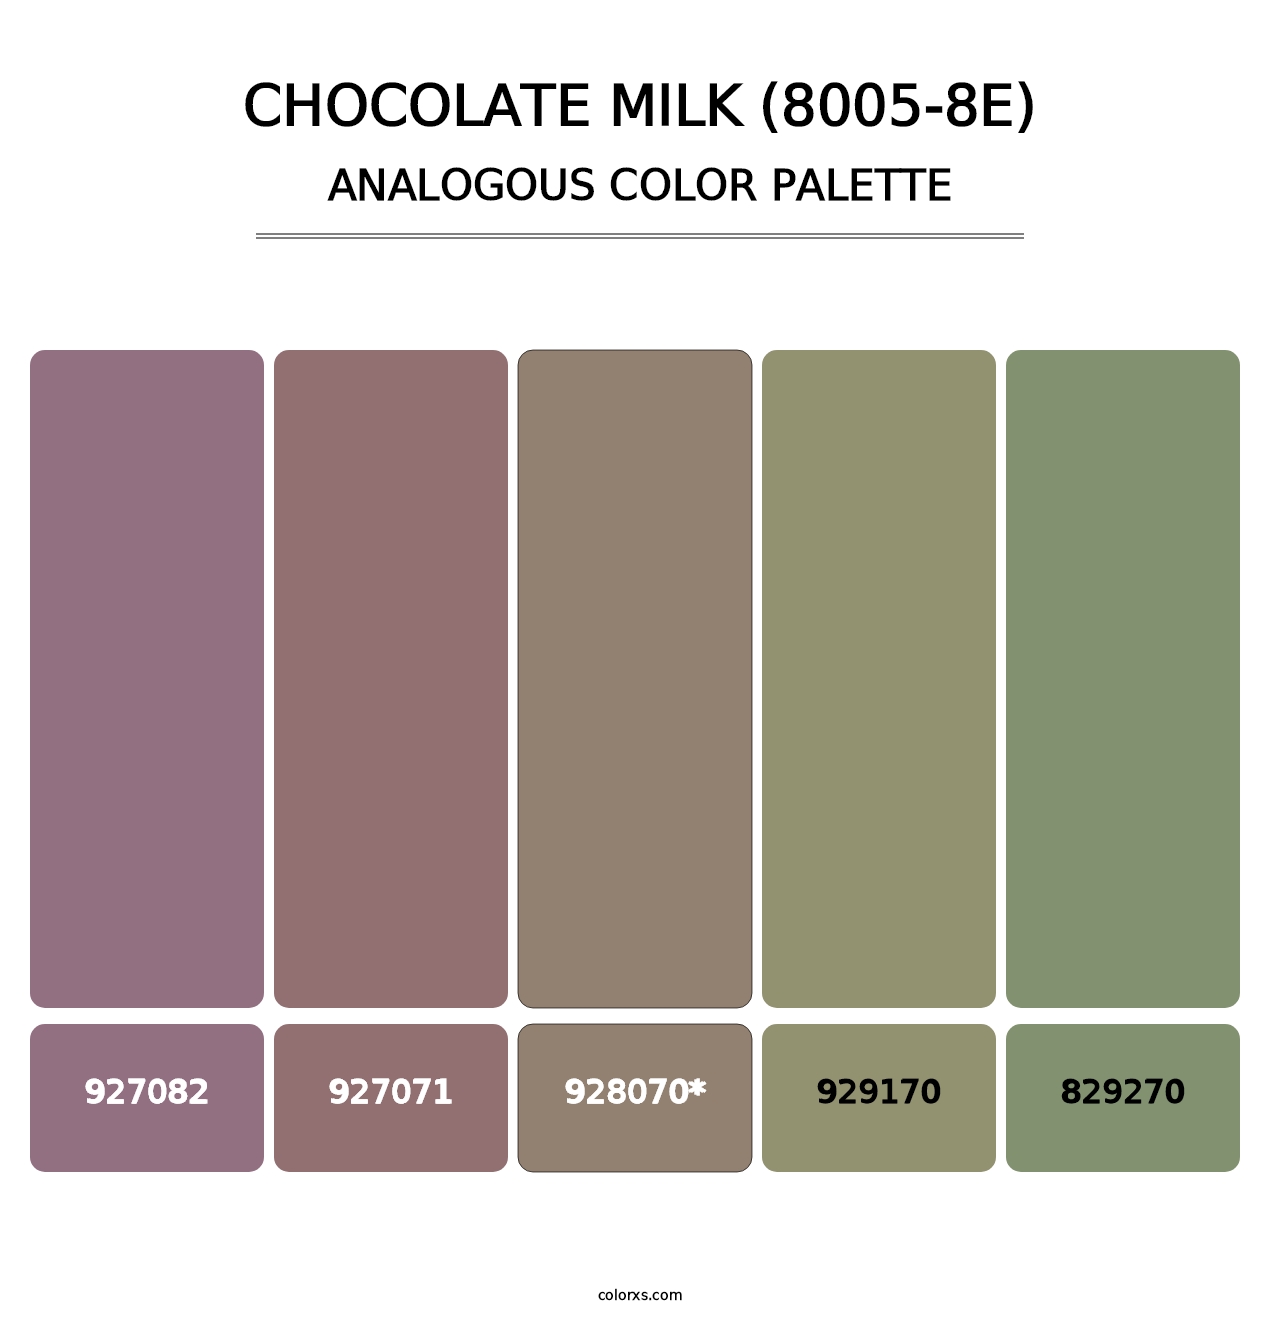 Chocolate Milk (8005-8E) - Analogous Color Palette